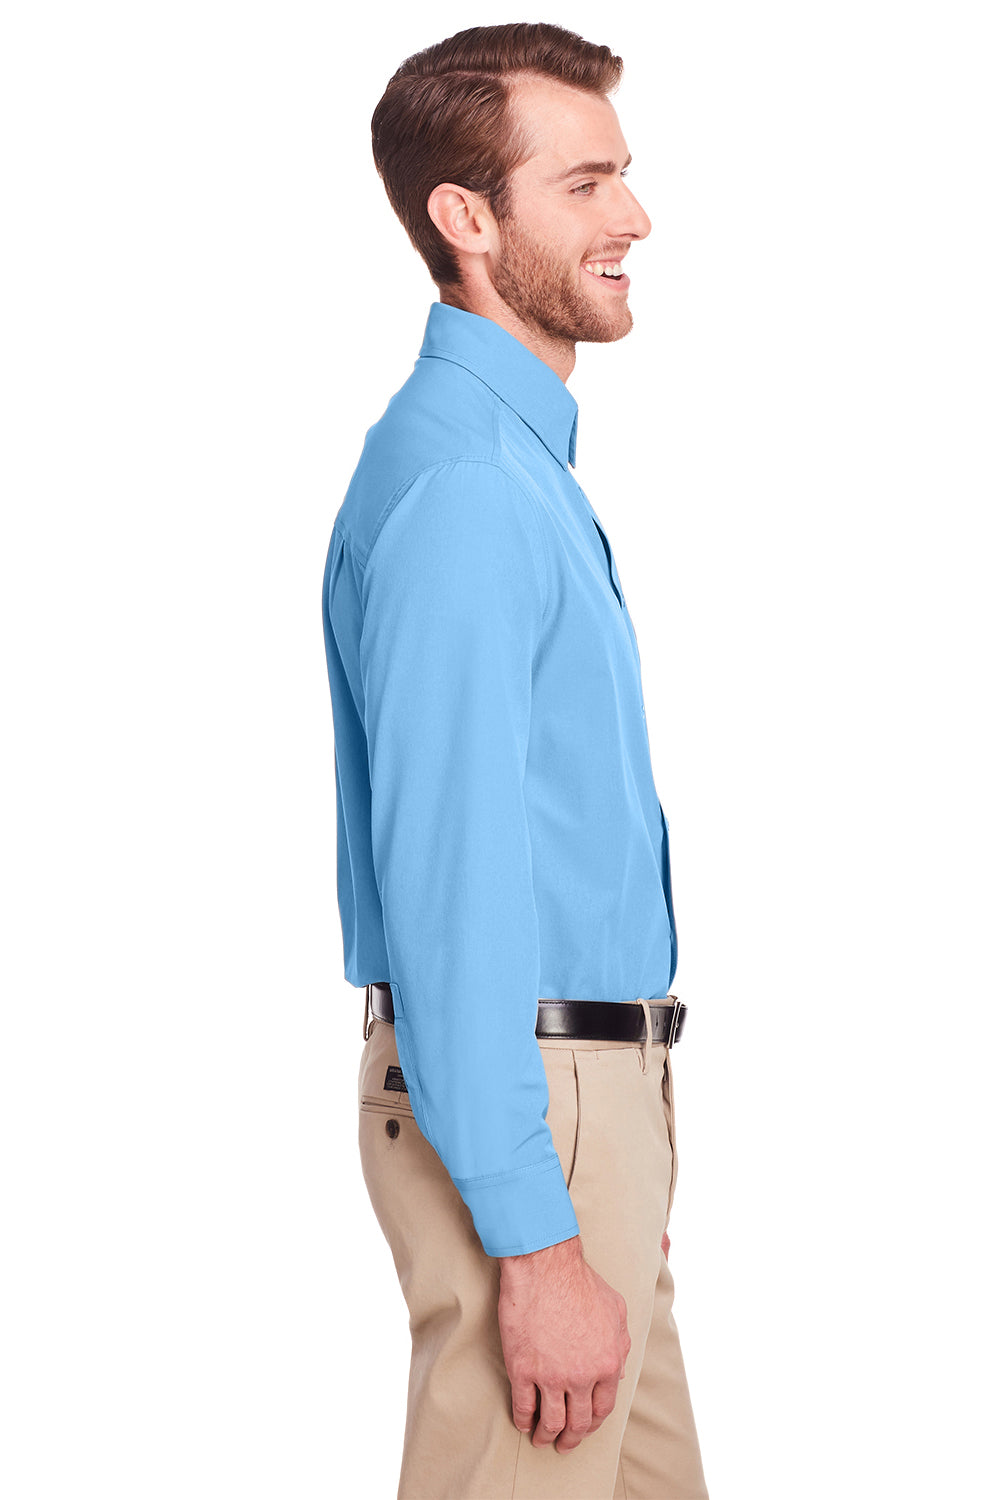 UltraClub UC500 Mens Bradley Performance Moisture Wicking Long Sleeve Button Down Shirt w/ Pocket Columbia Blue Side